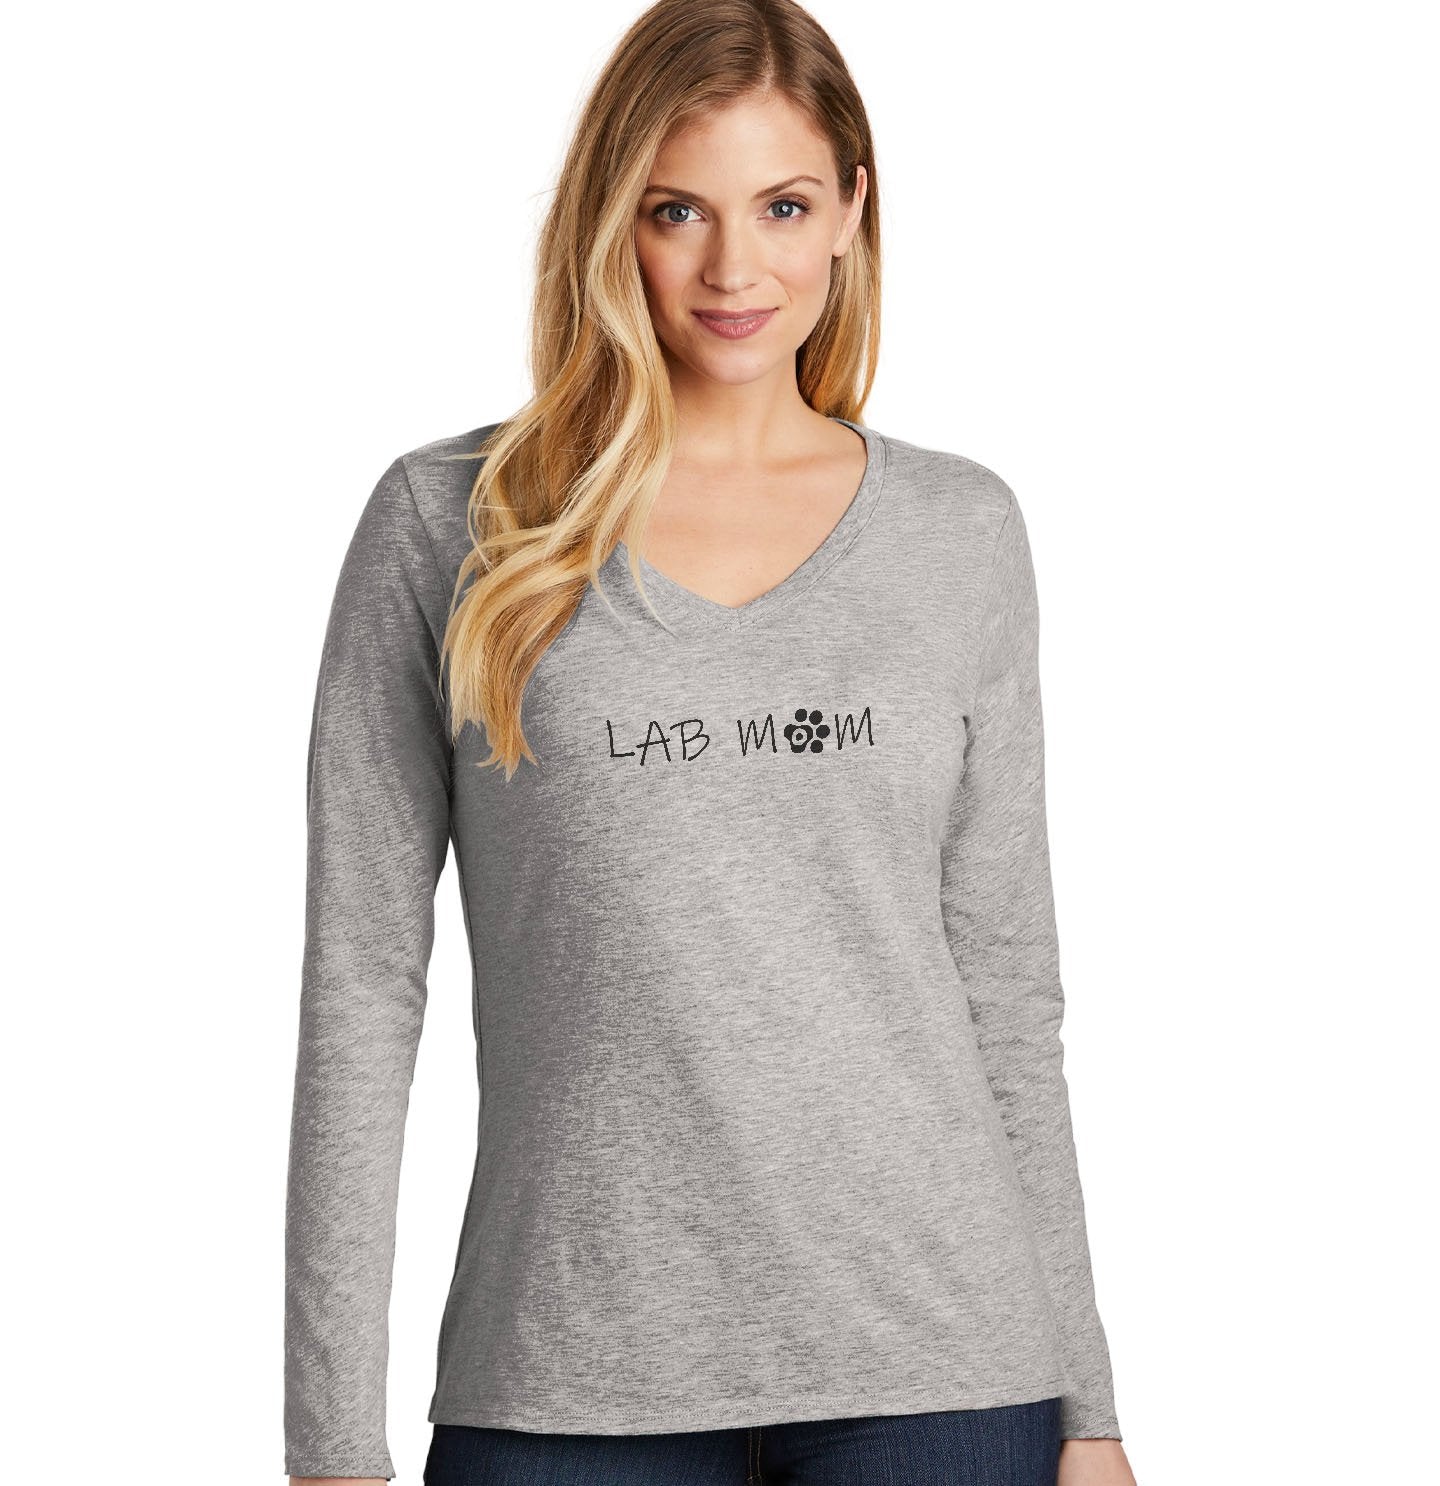 Lab Mom - Paw Text - Women's V-Neck Long Sleeve T-Shirt